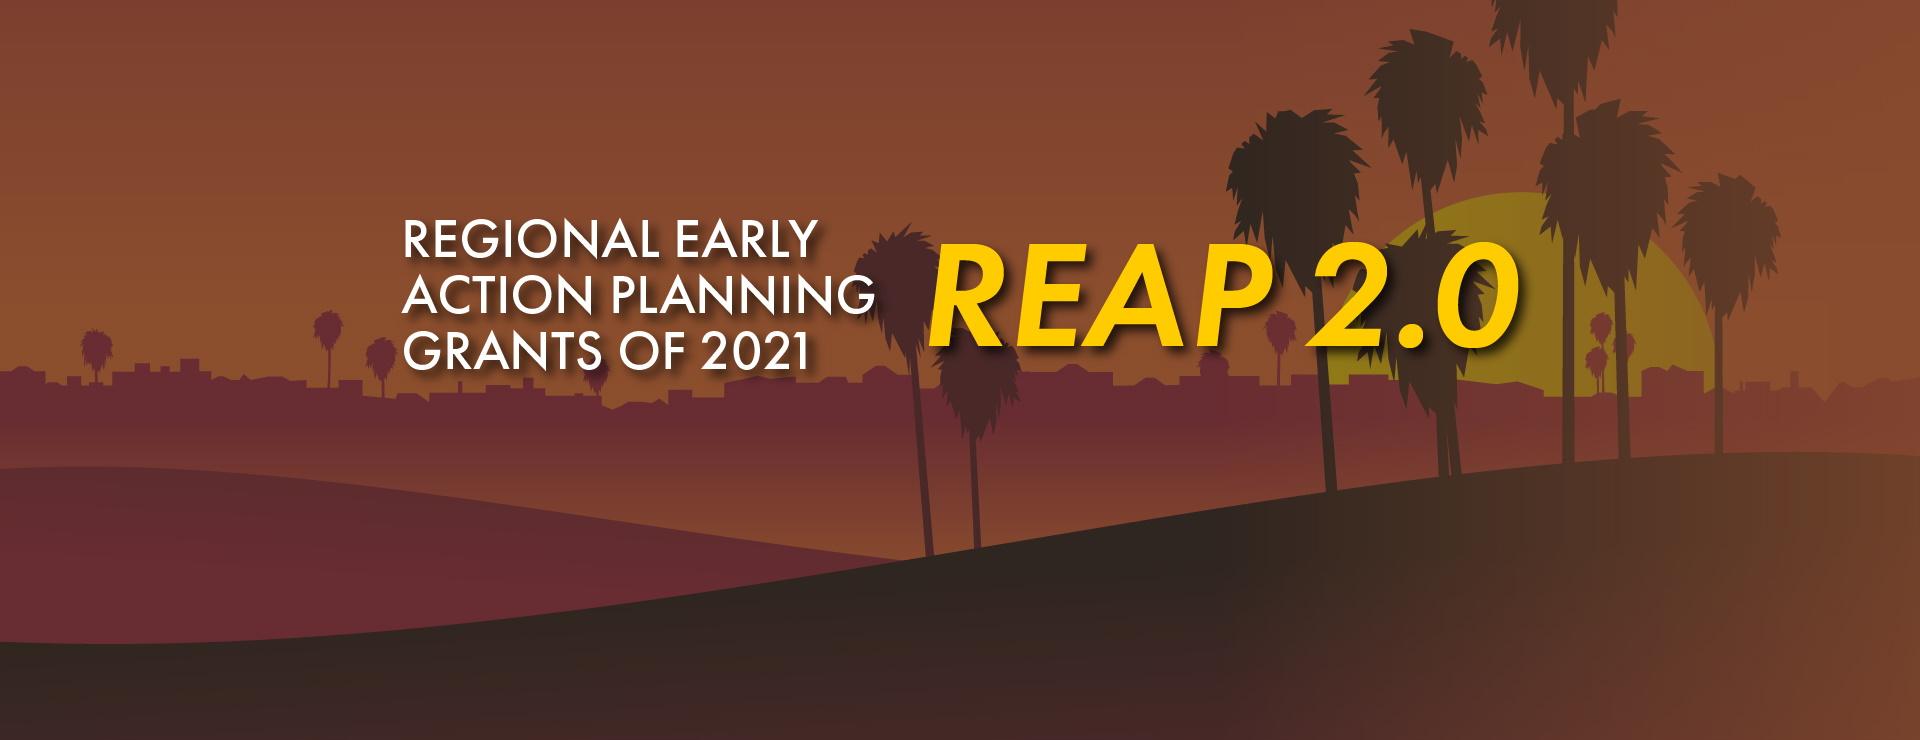 Regional Early Action Planning Grants of 2021 Homepage Hero Image